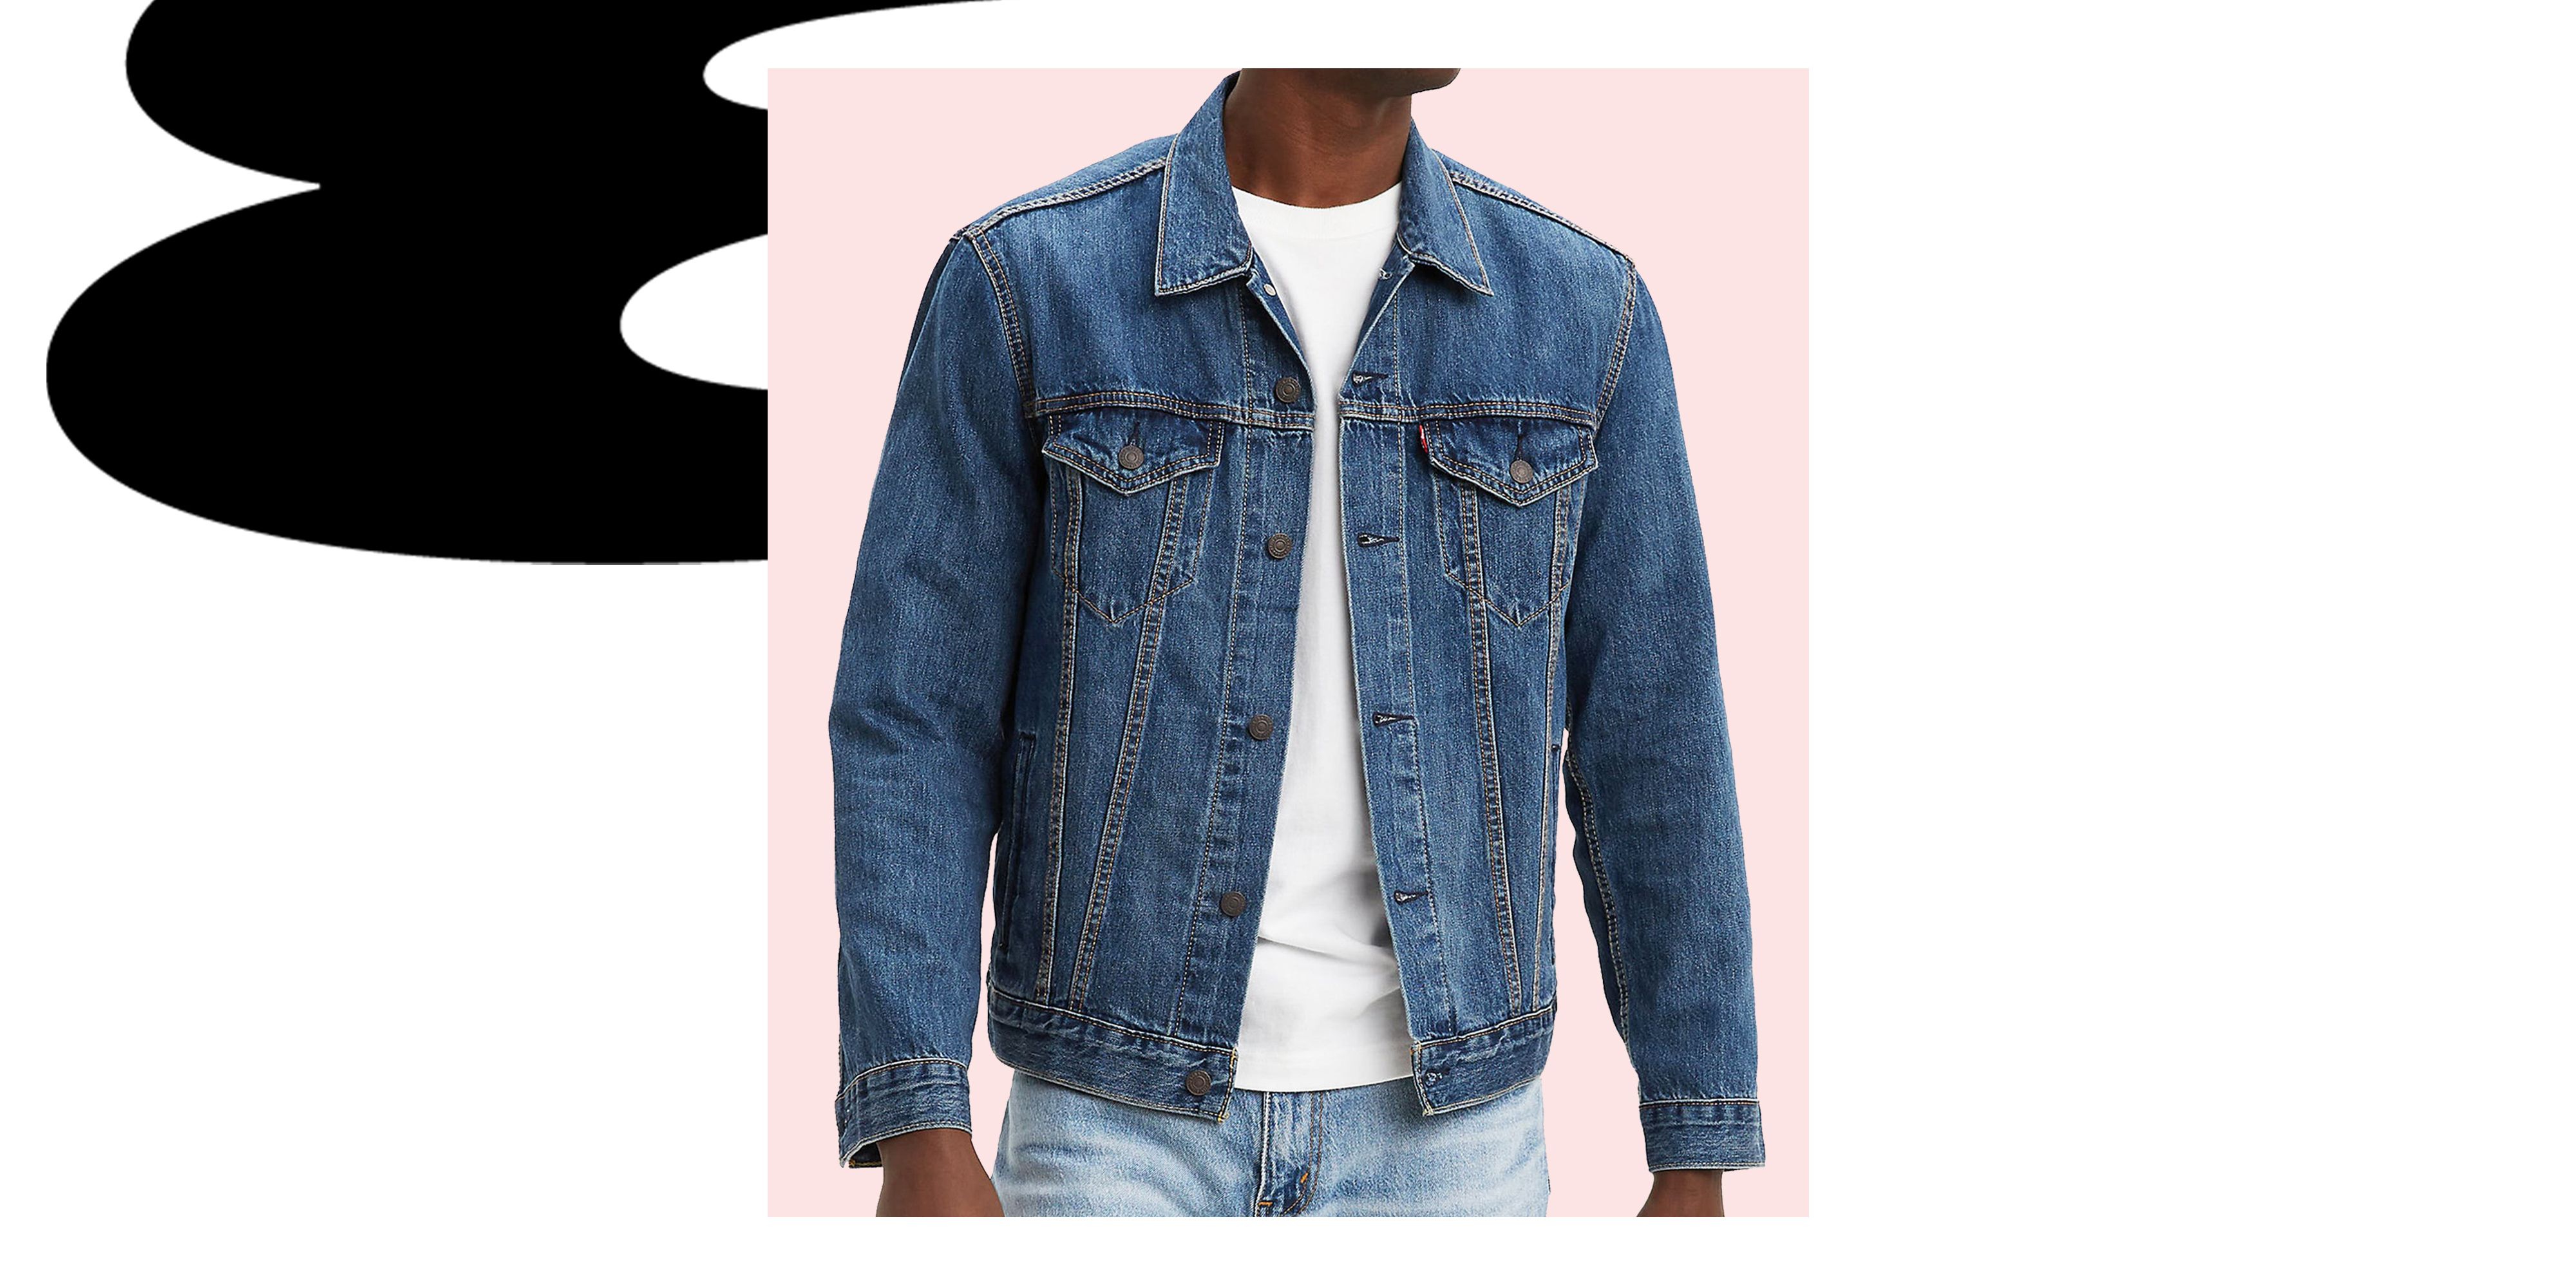 Denim Jacket Guide: My Favorite Jean Jacket Styles - Fashion Jackson